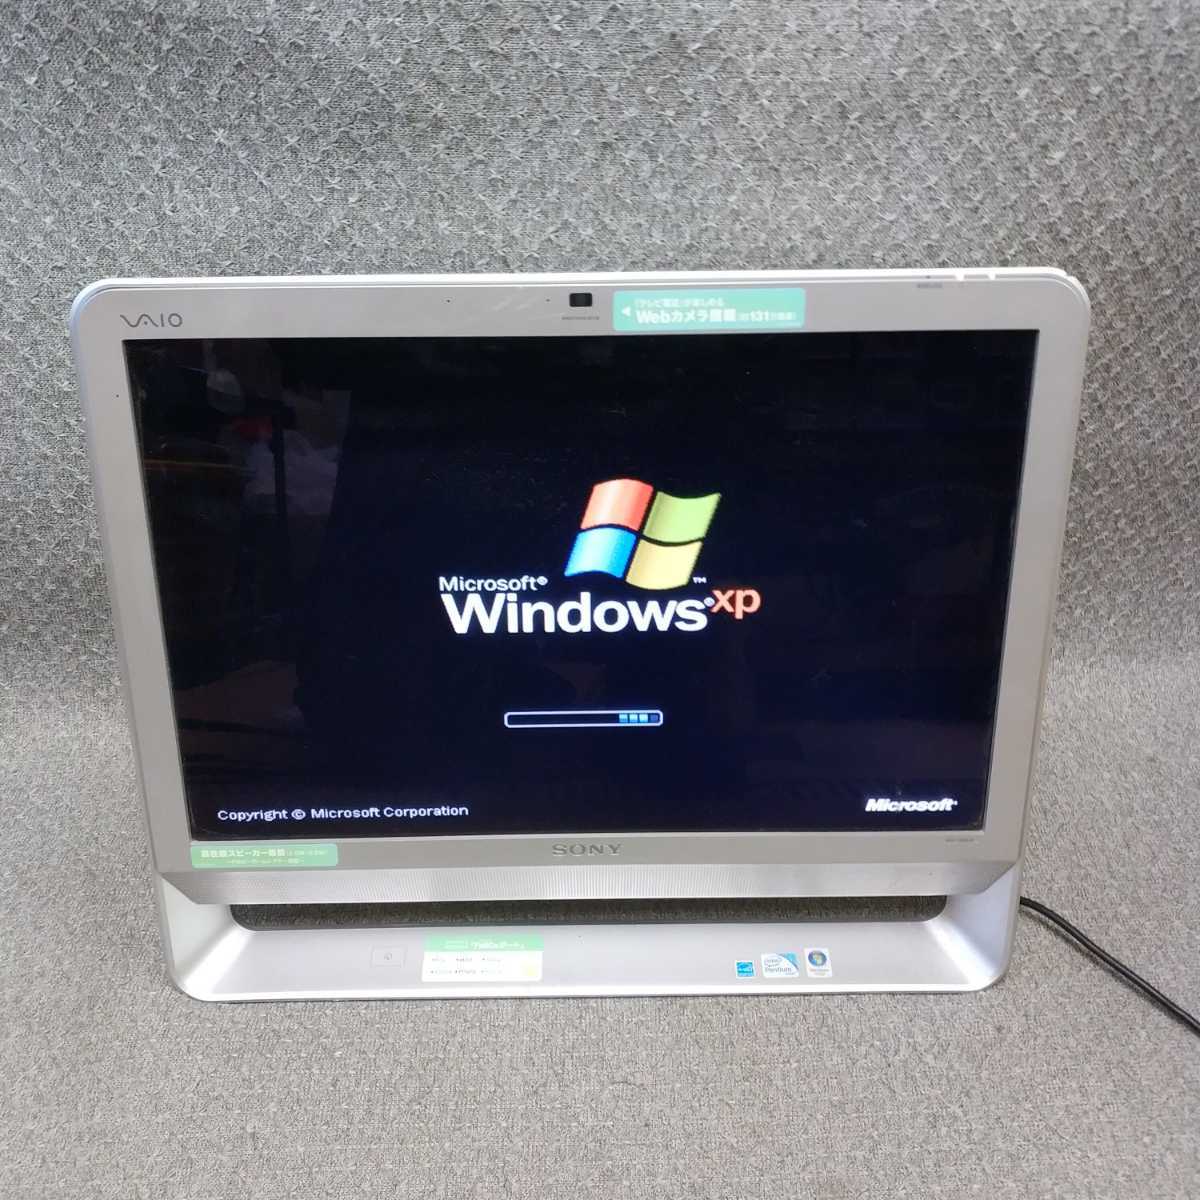 Windows XP・7・10 OS選択可 超高速 小型 HP Compaq Elite 8300 USDT